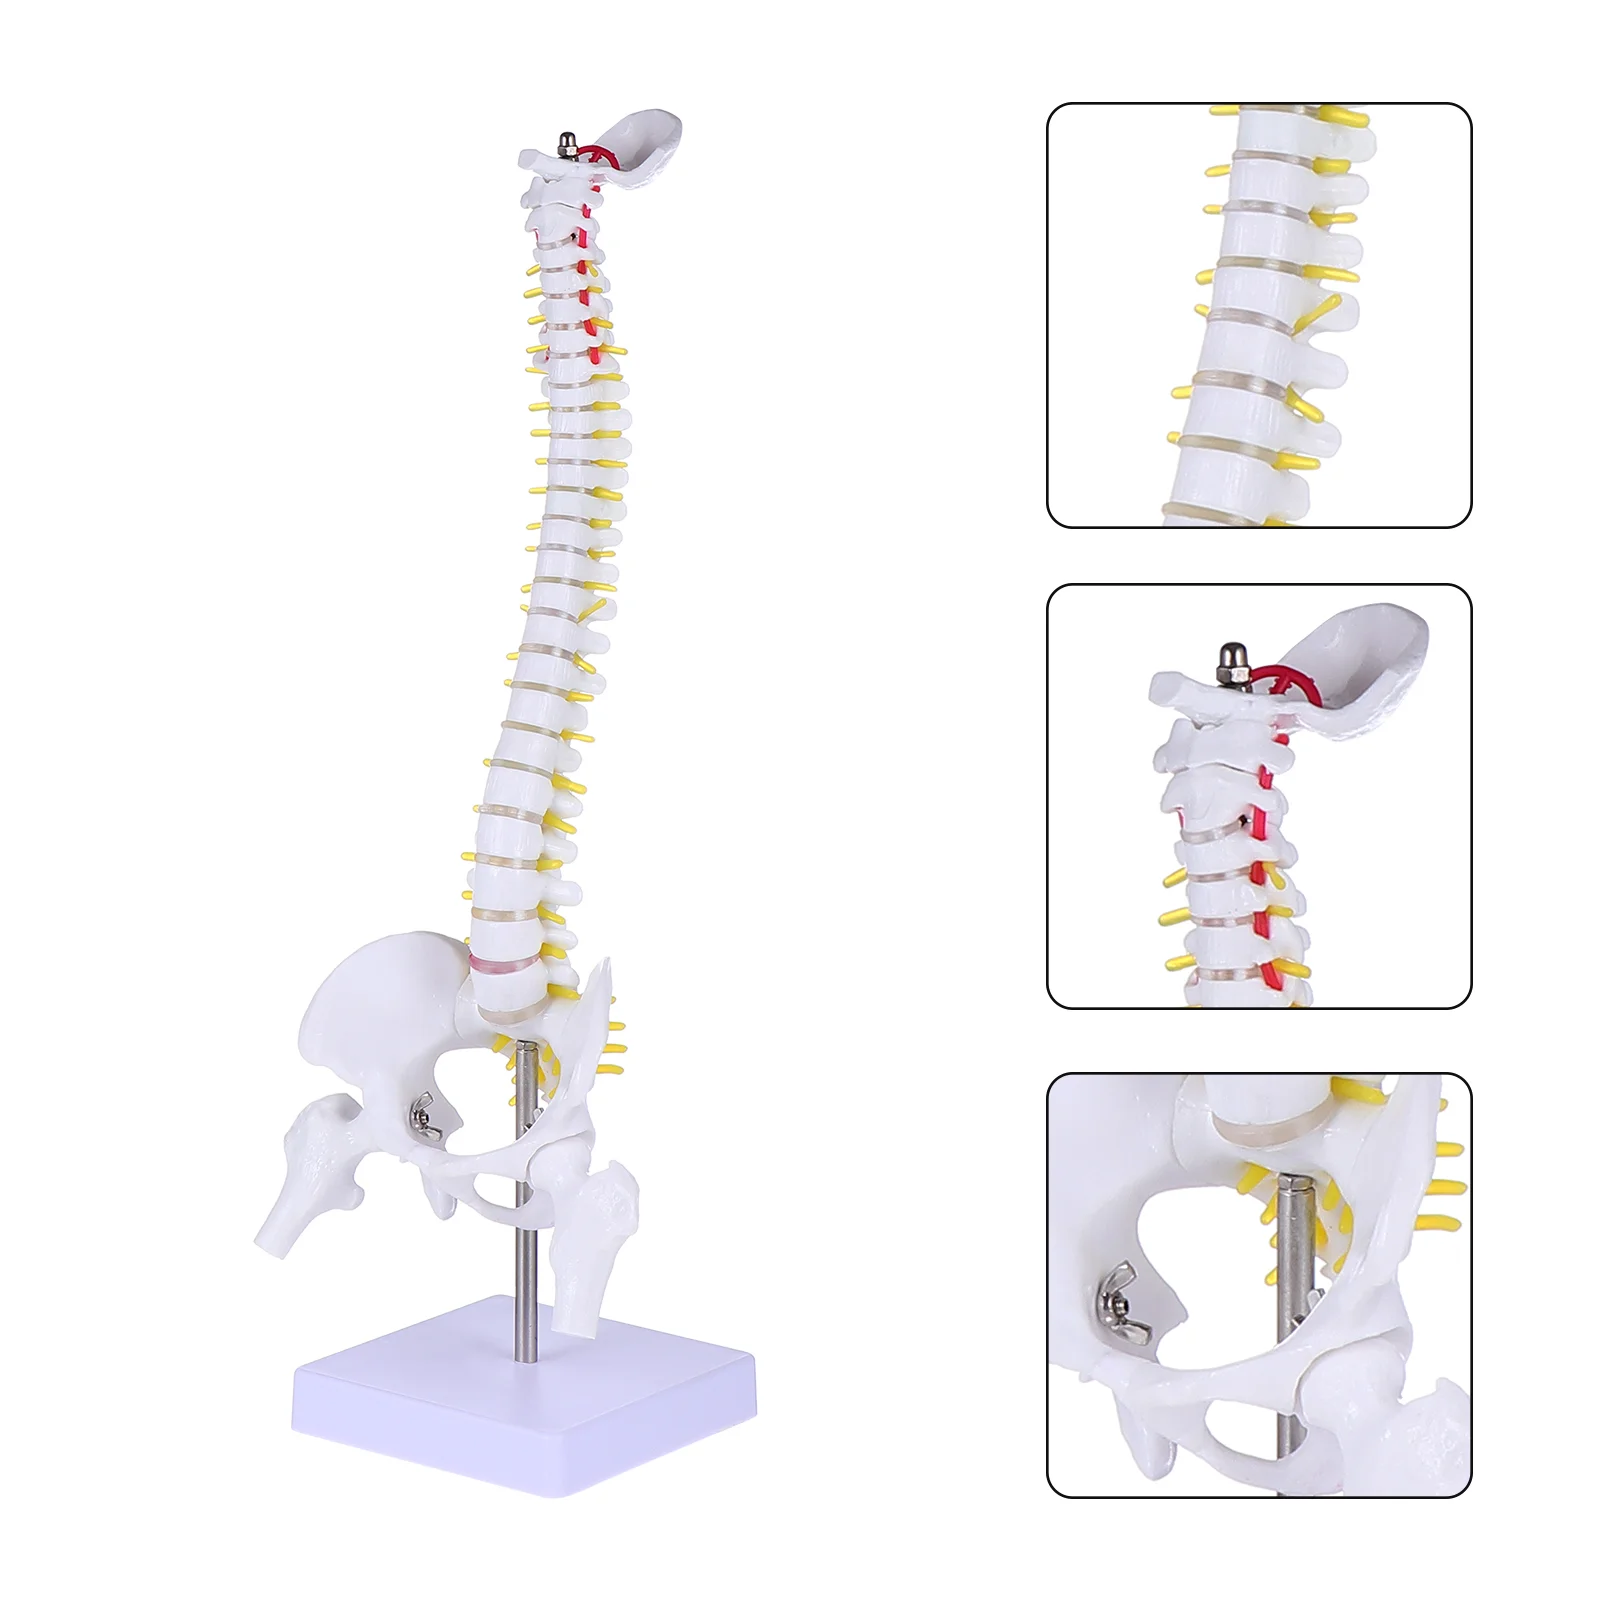 

Model Spine Anatomy Human Spinal Anatomical Models Training Lumbar Vertebrae Practice Body Chiropractic Demonstration